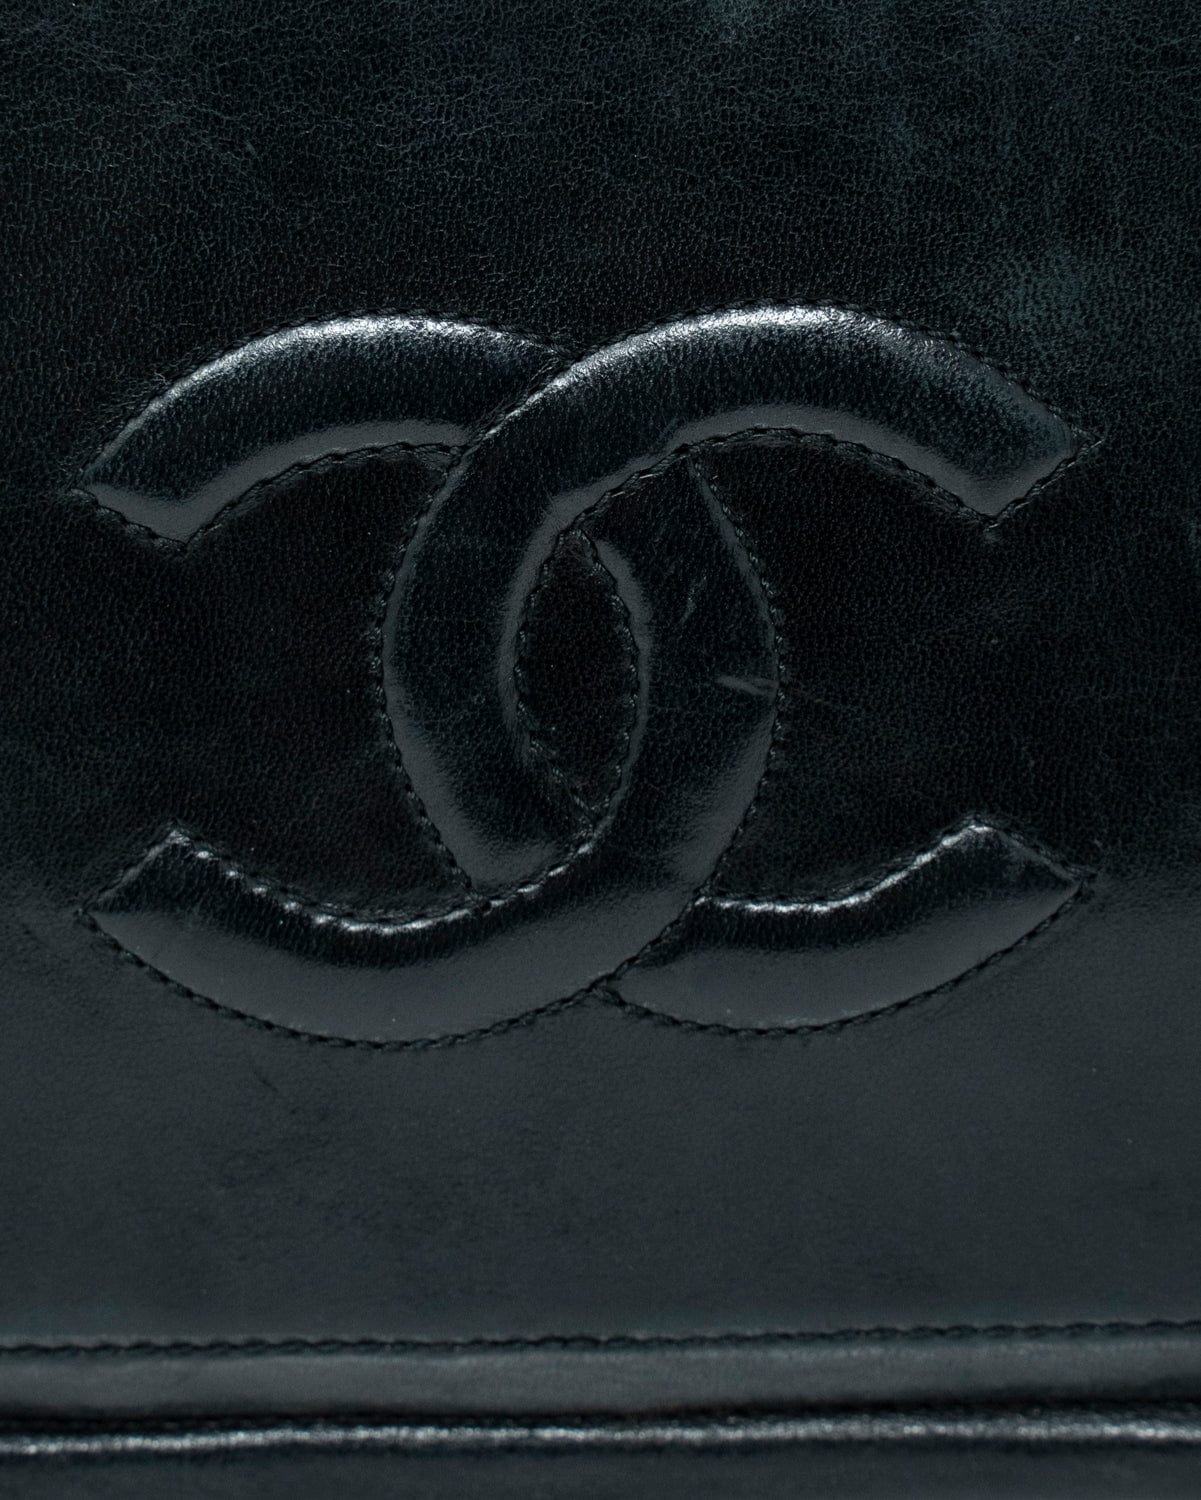 Chanel Vintage Chanel Black Camera Bag - AWL2541